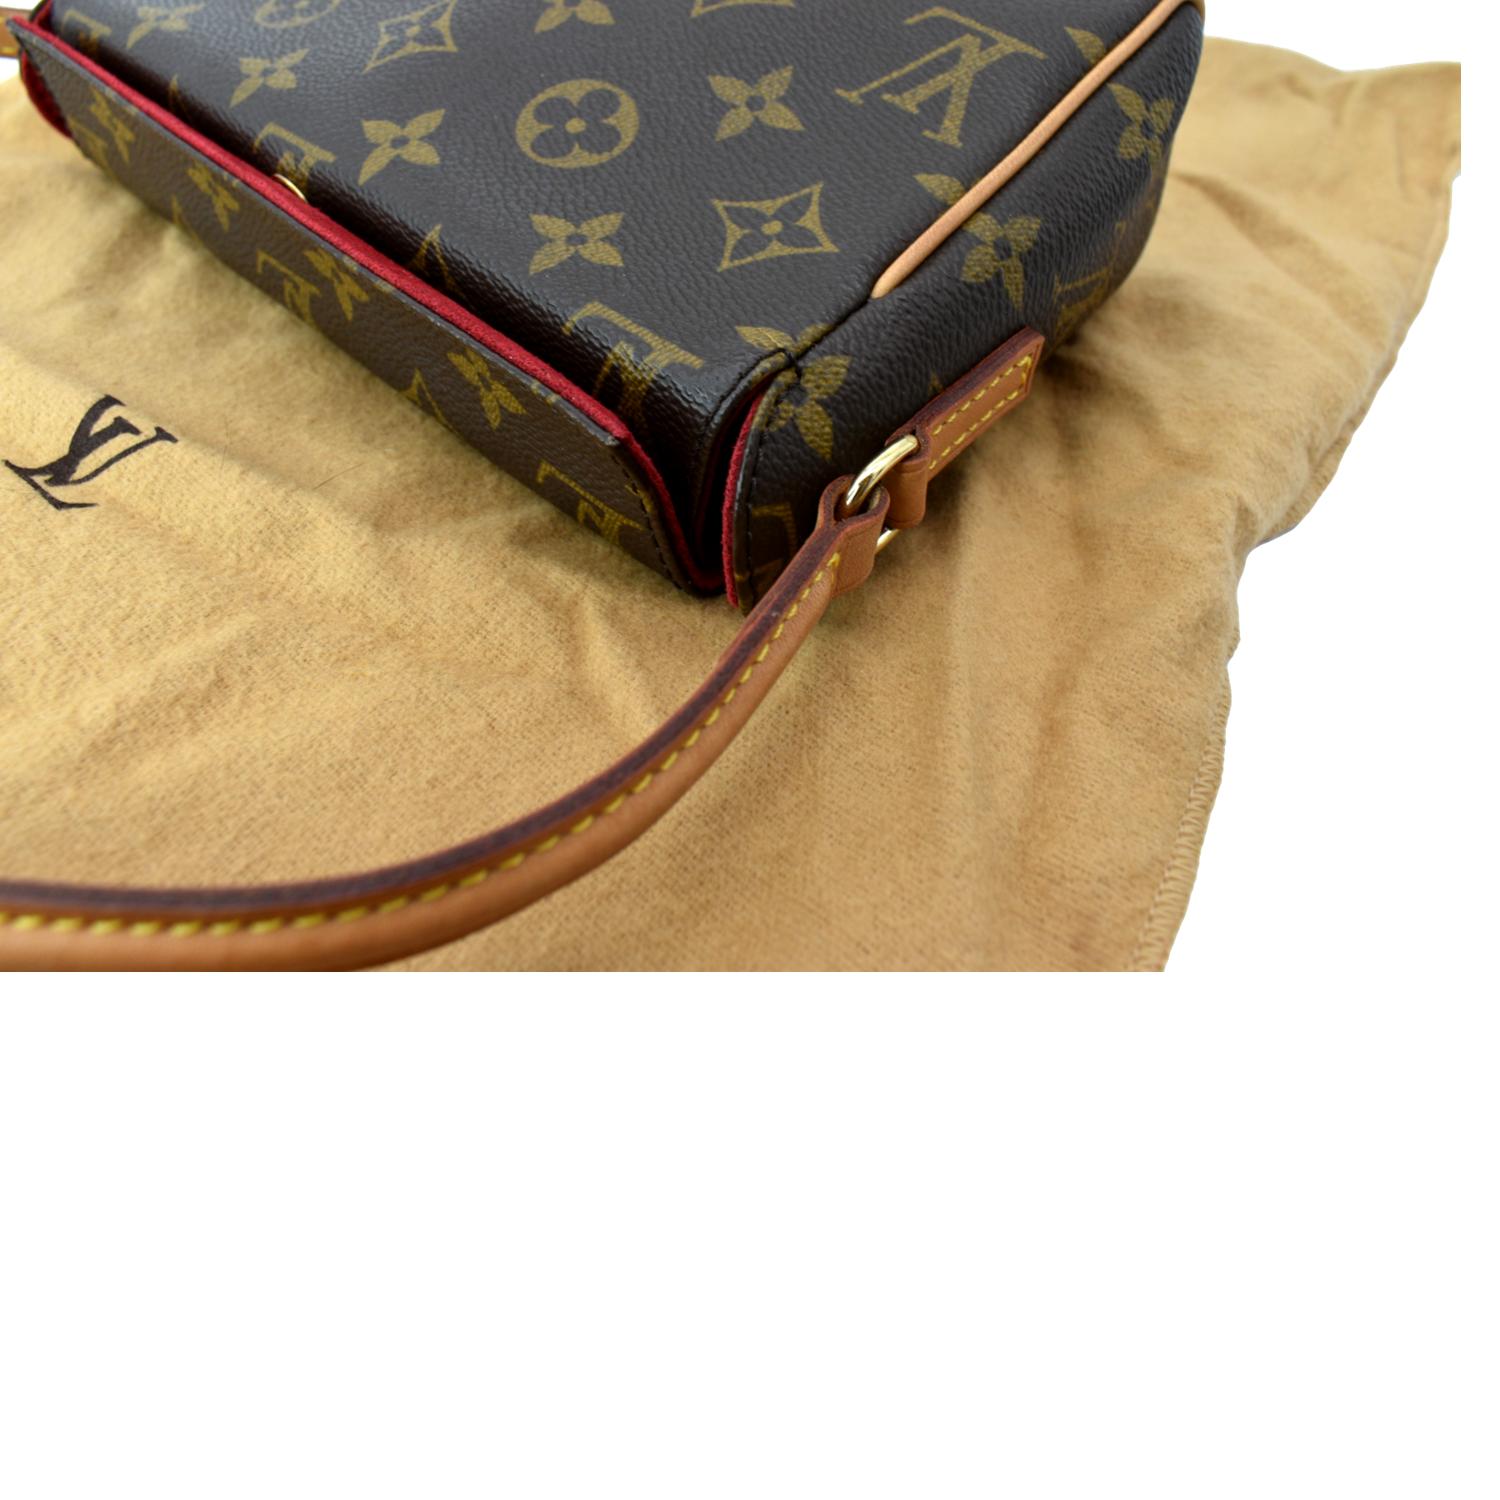 Buy [Used] LOUIS VUITTON Recital Shoulder Bag Monogram M51900 from